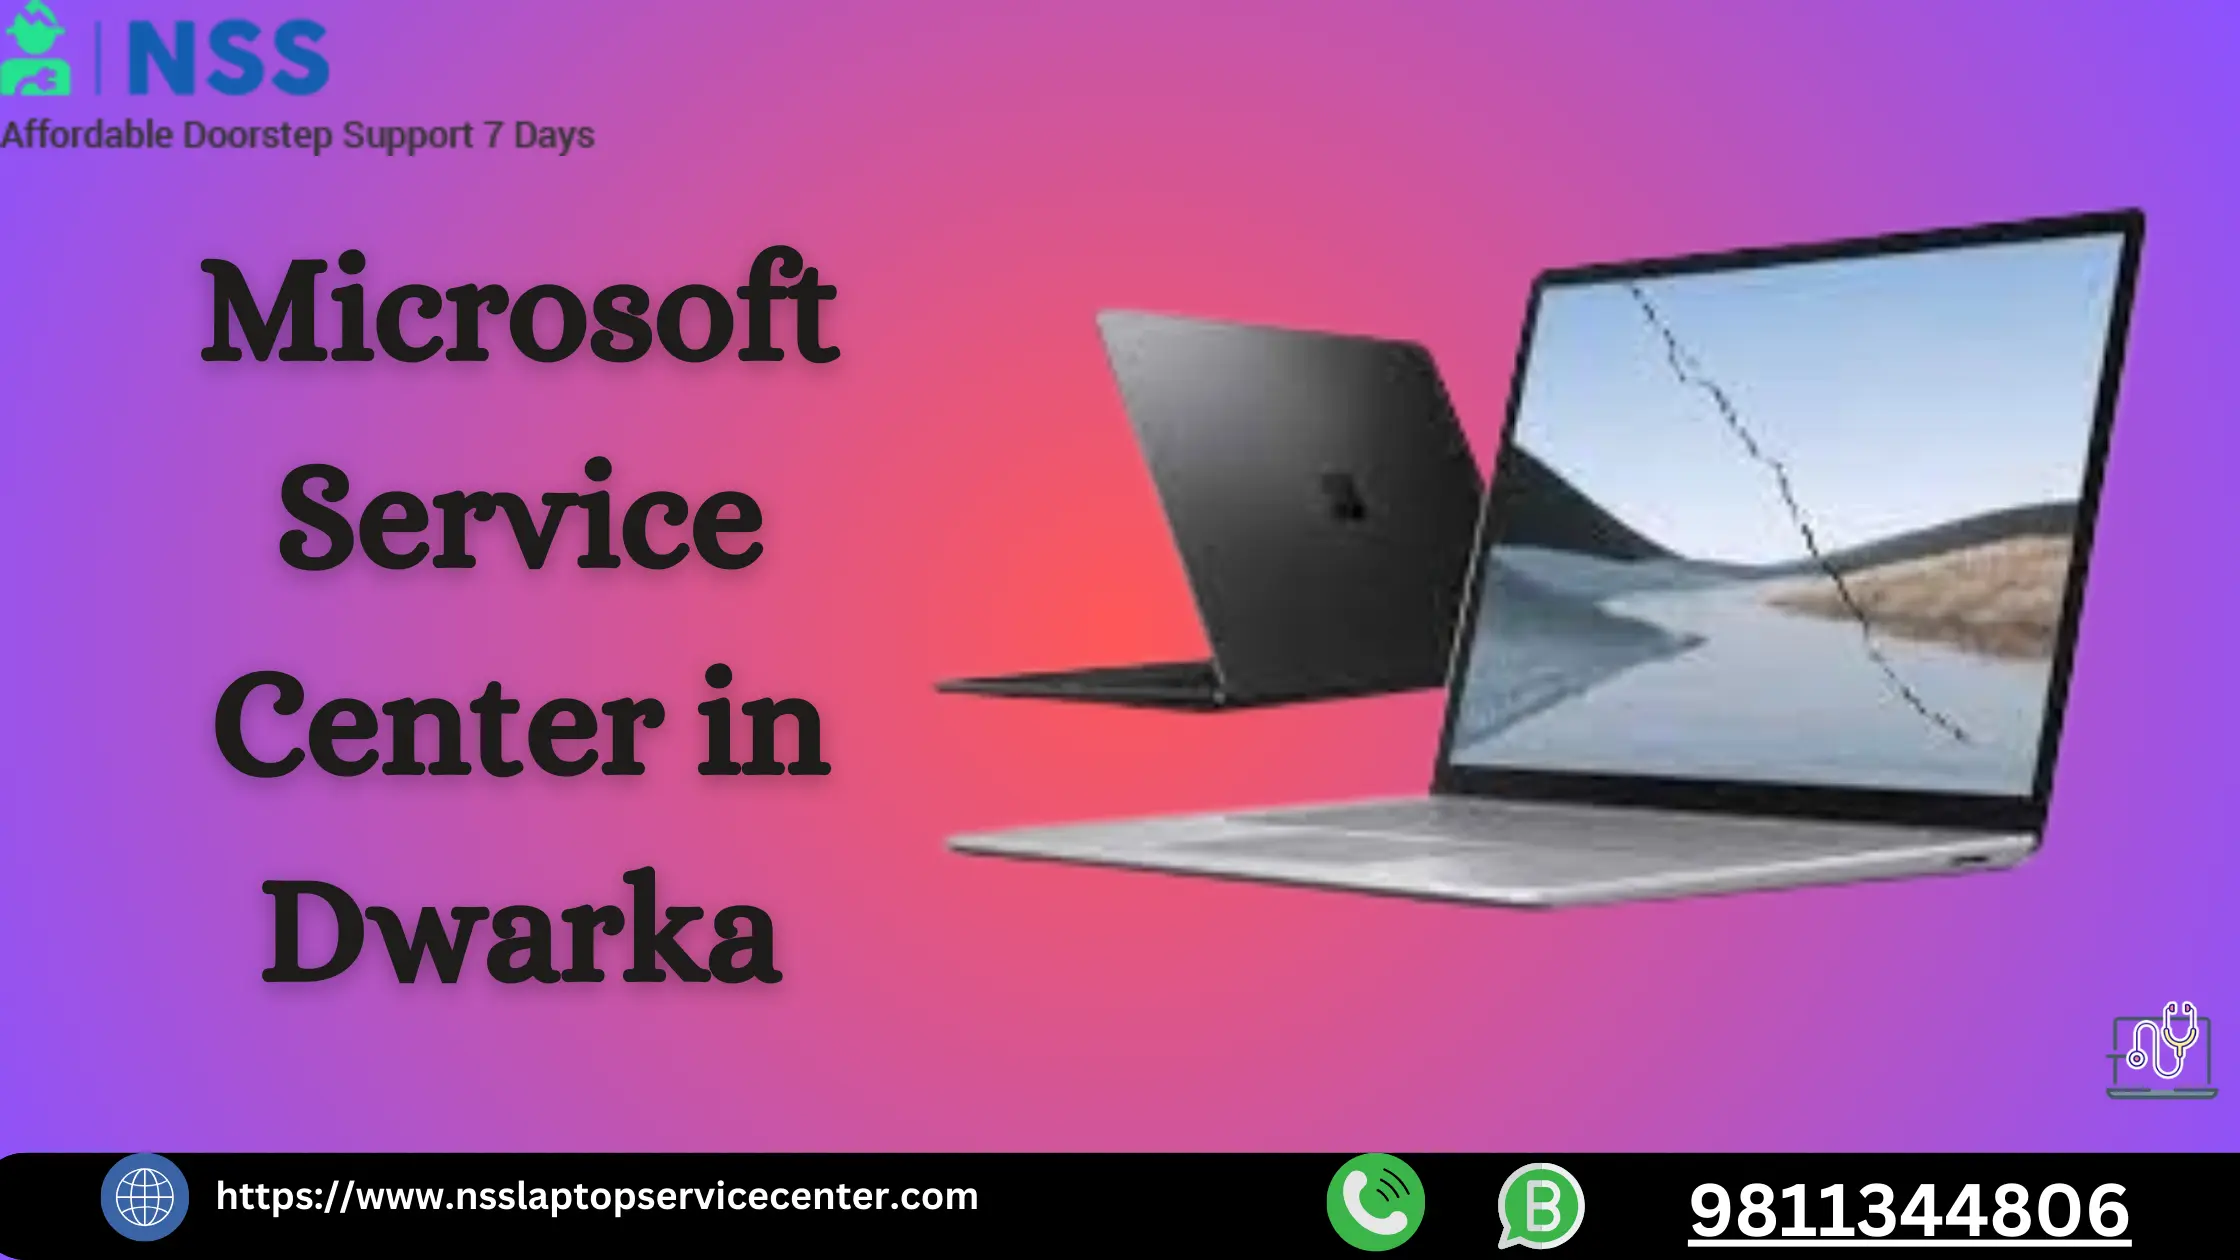 Are You Looking Microsoft Service Center in Dwarka Near Delhi